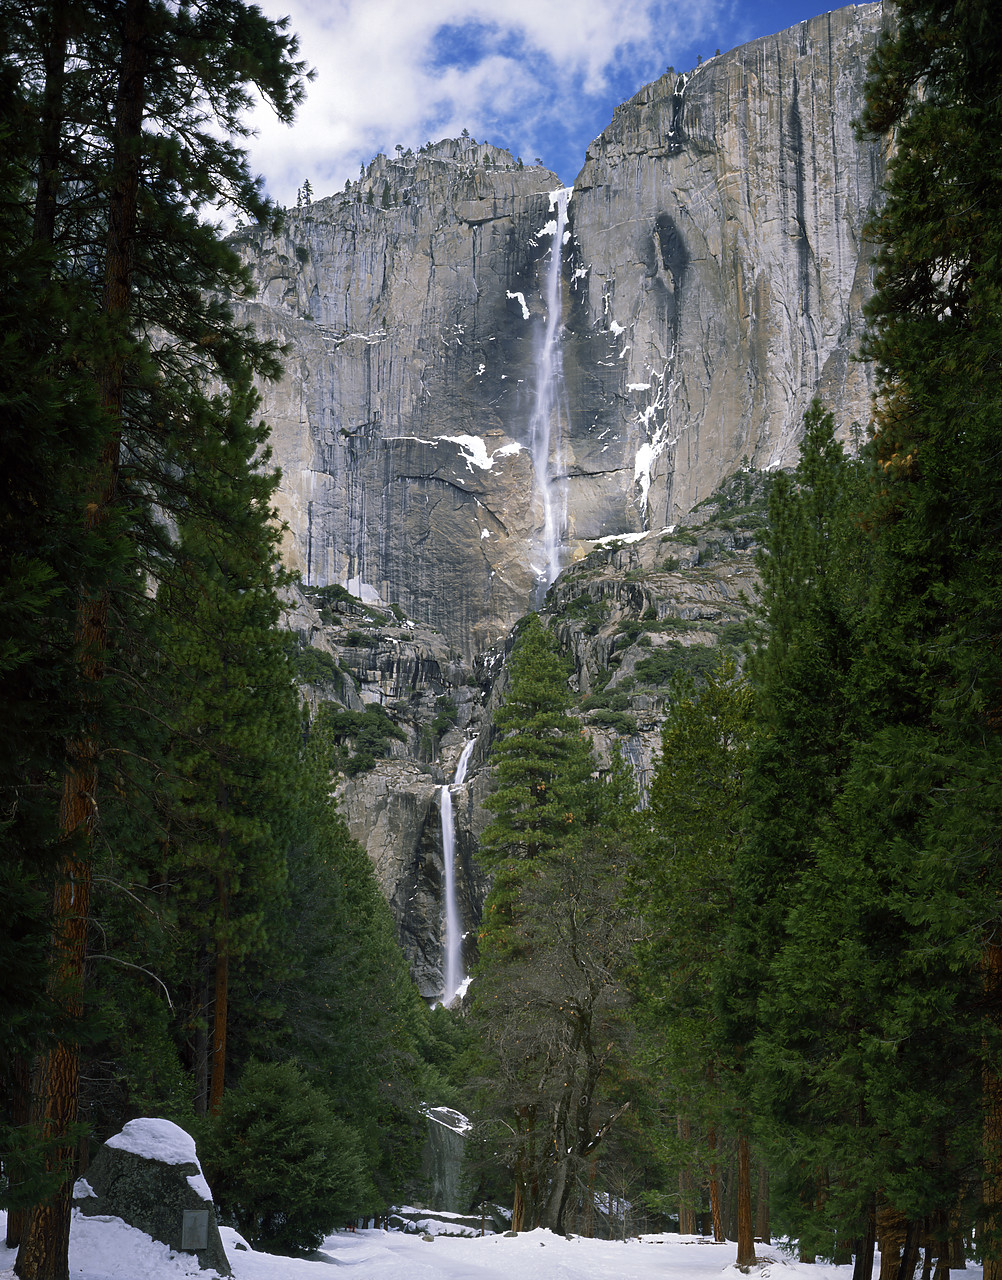 #891870-1 - Yosemite Falls in Winter, Yosemite National Park, California, USA